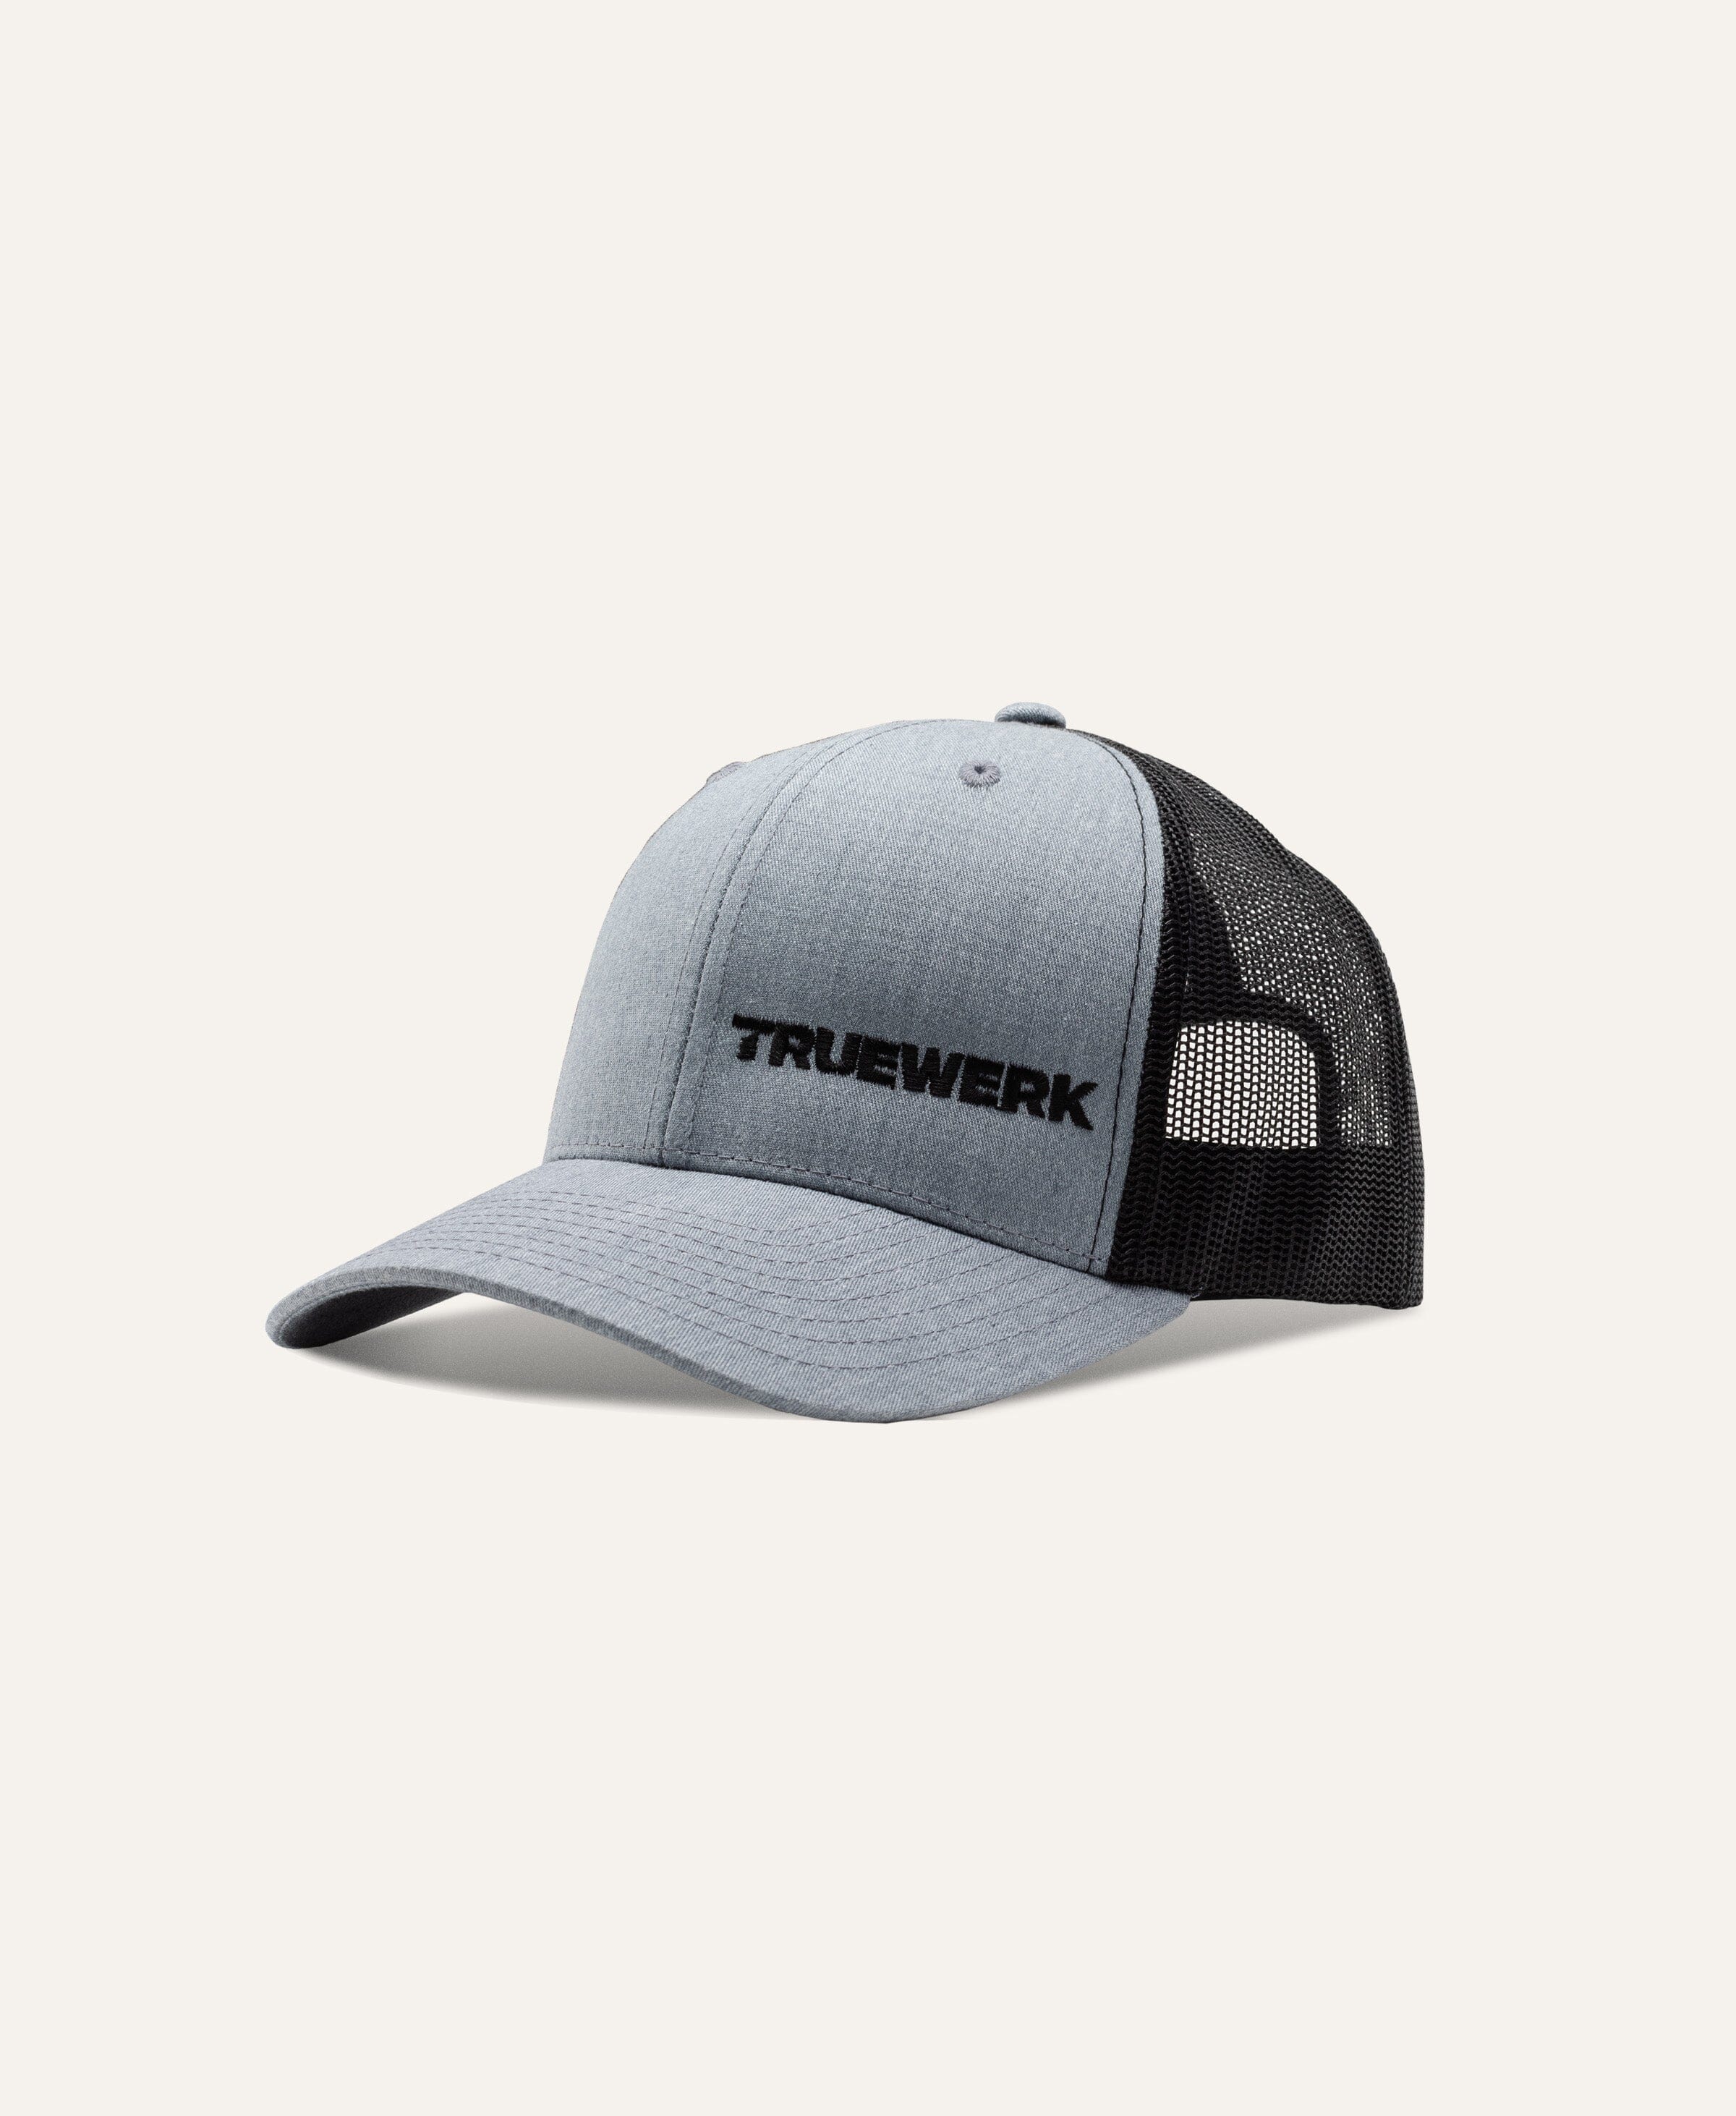 Trucker Shop | Mesh at Two-Tone Truewerk Hat Back Online